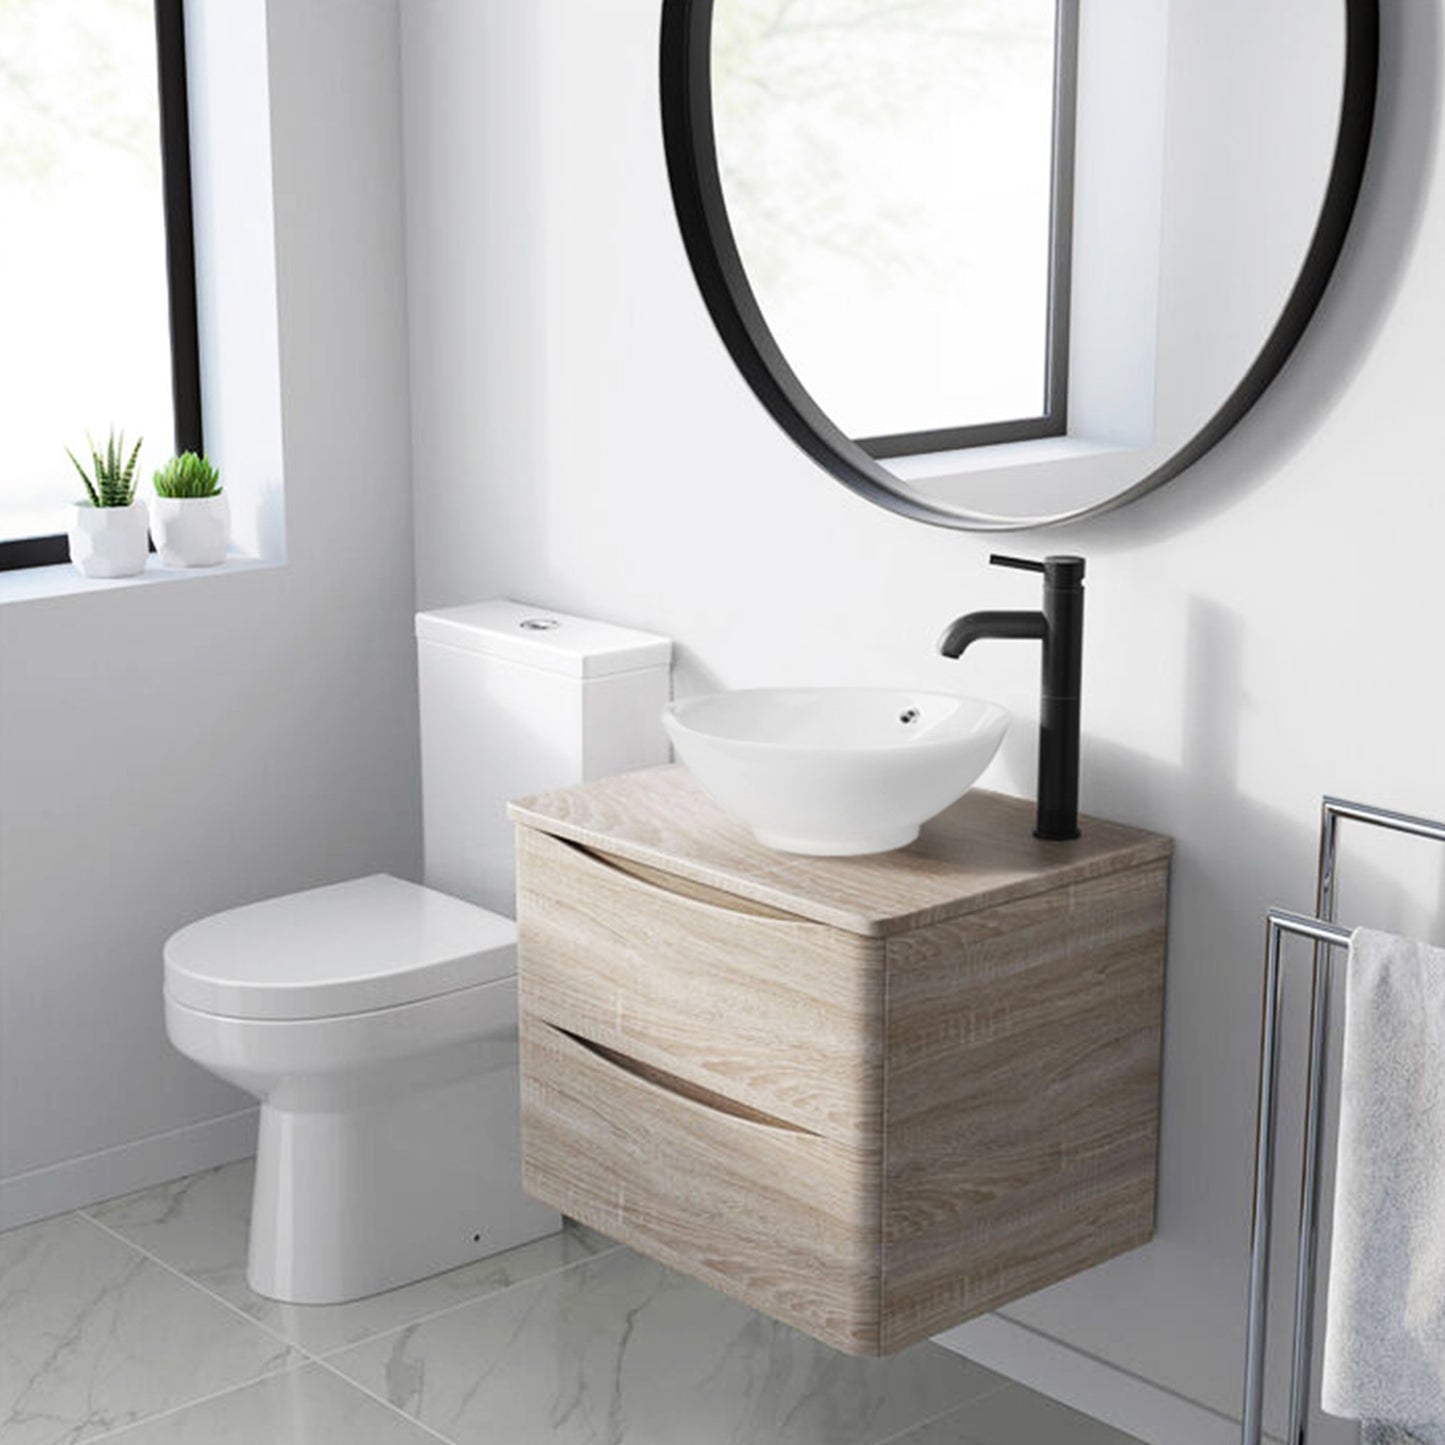 16" Porcelain Ceramic Vanity Sink Wash Basin With Overflow